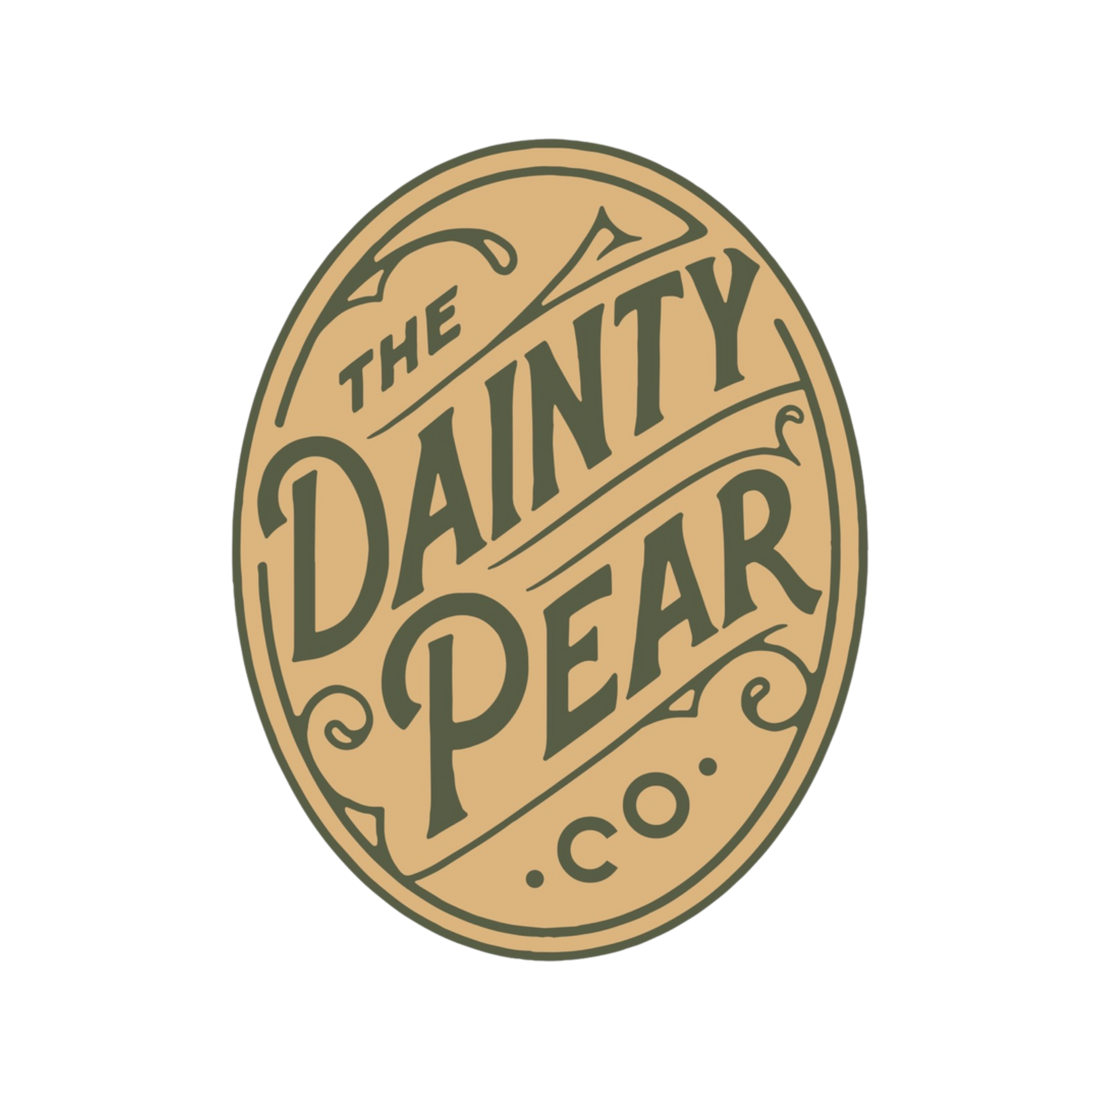 The Dainty Pear Co.